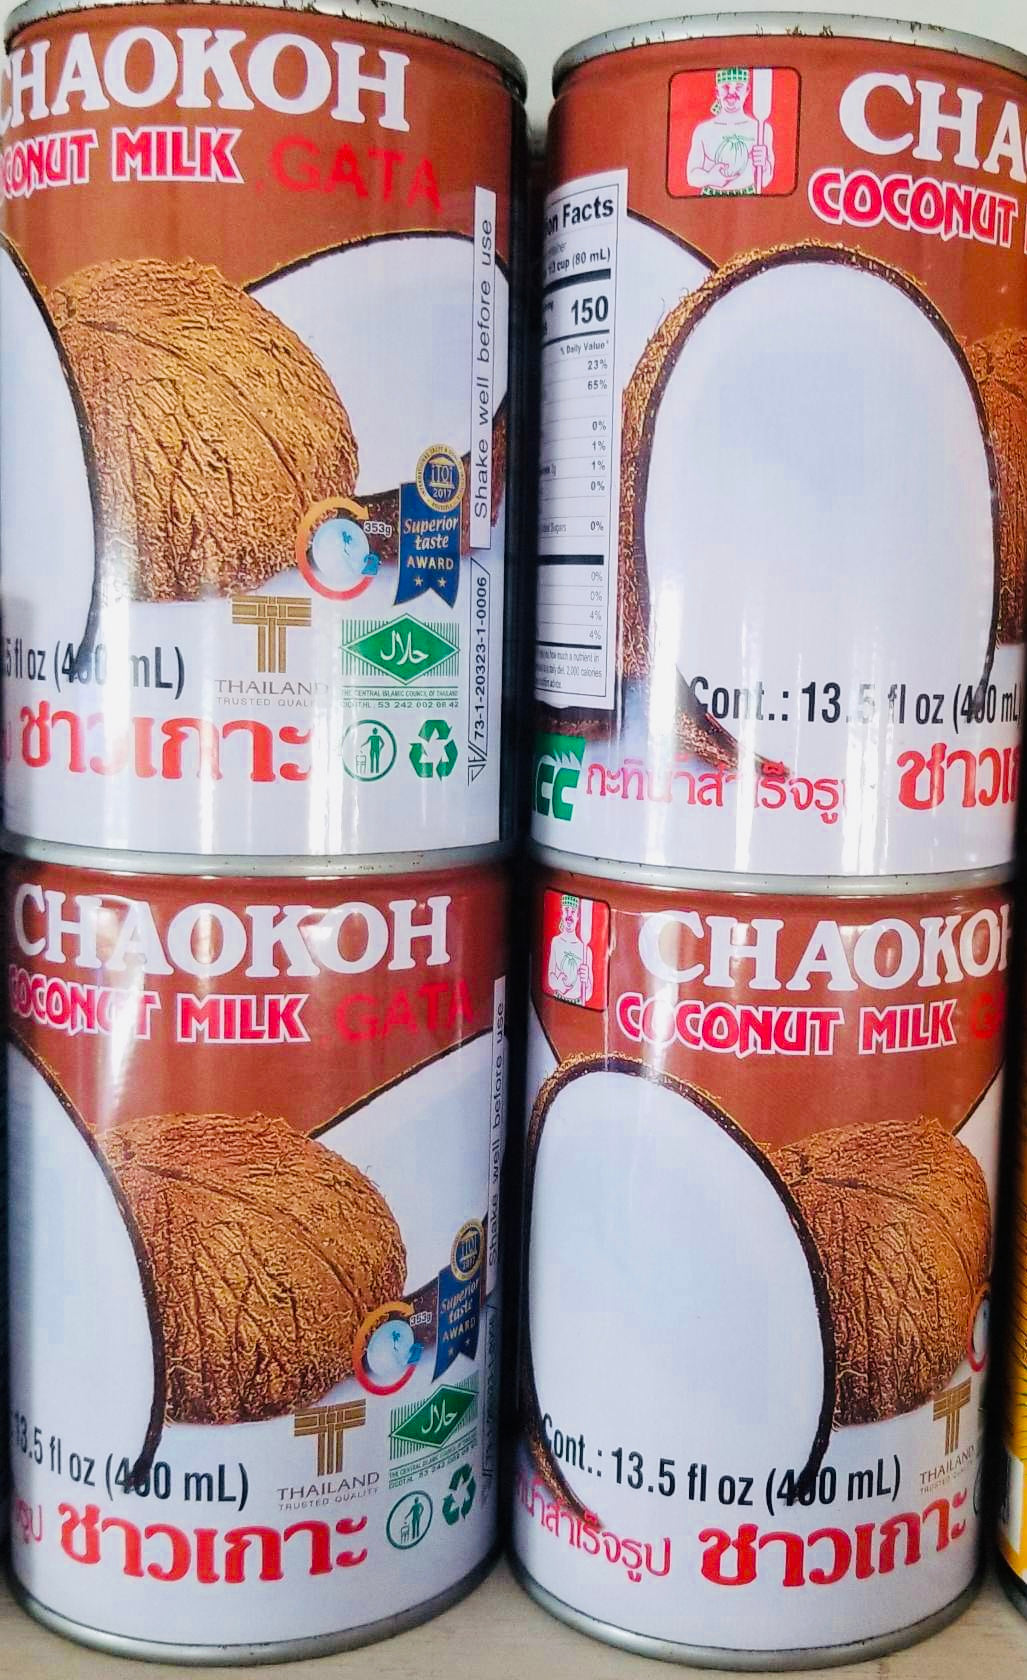 Chaokoh-Coconut Milk- 400ml